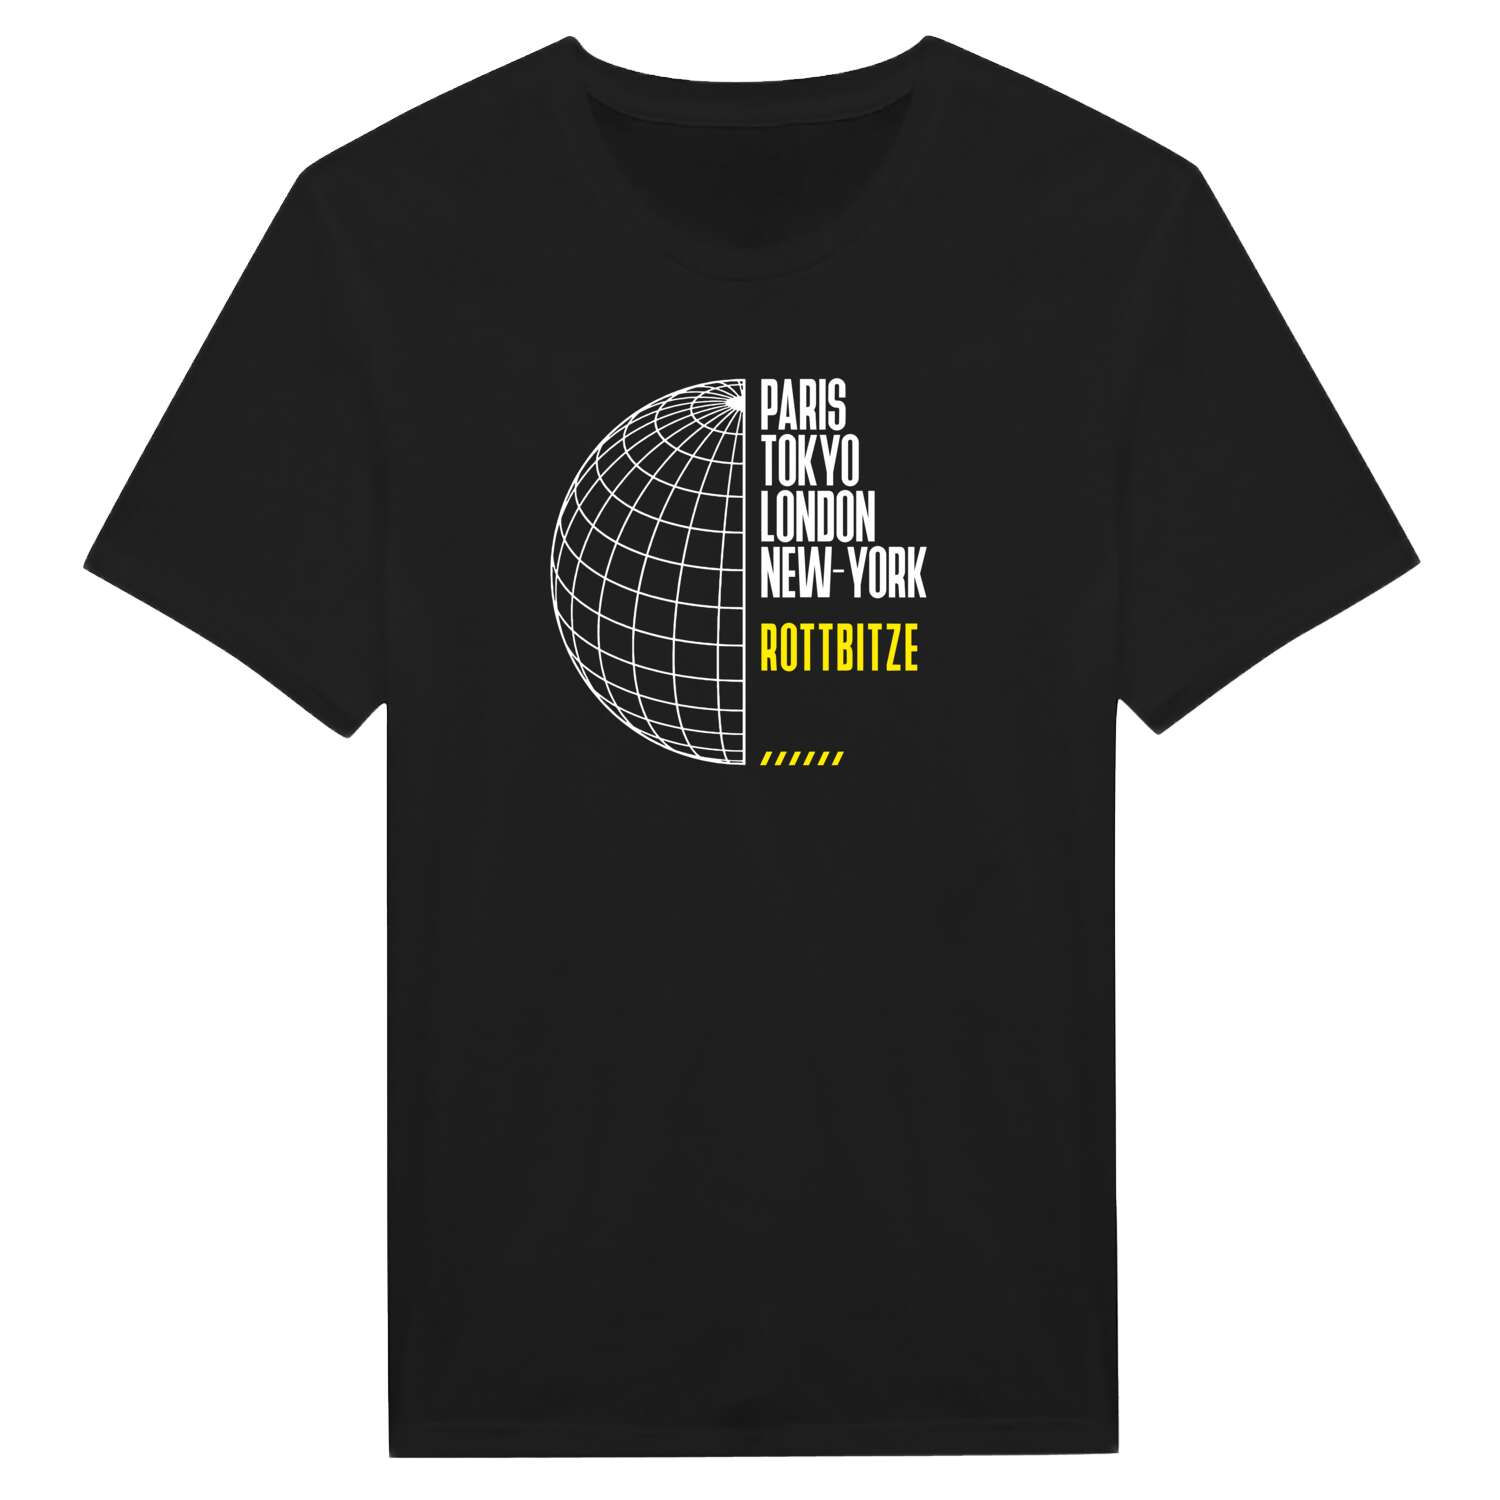 Rottbitze T-Shirt »Paris Tokyo London«